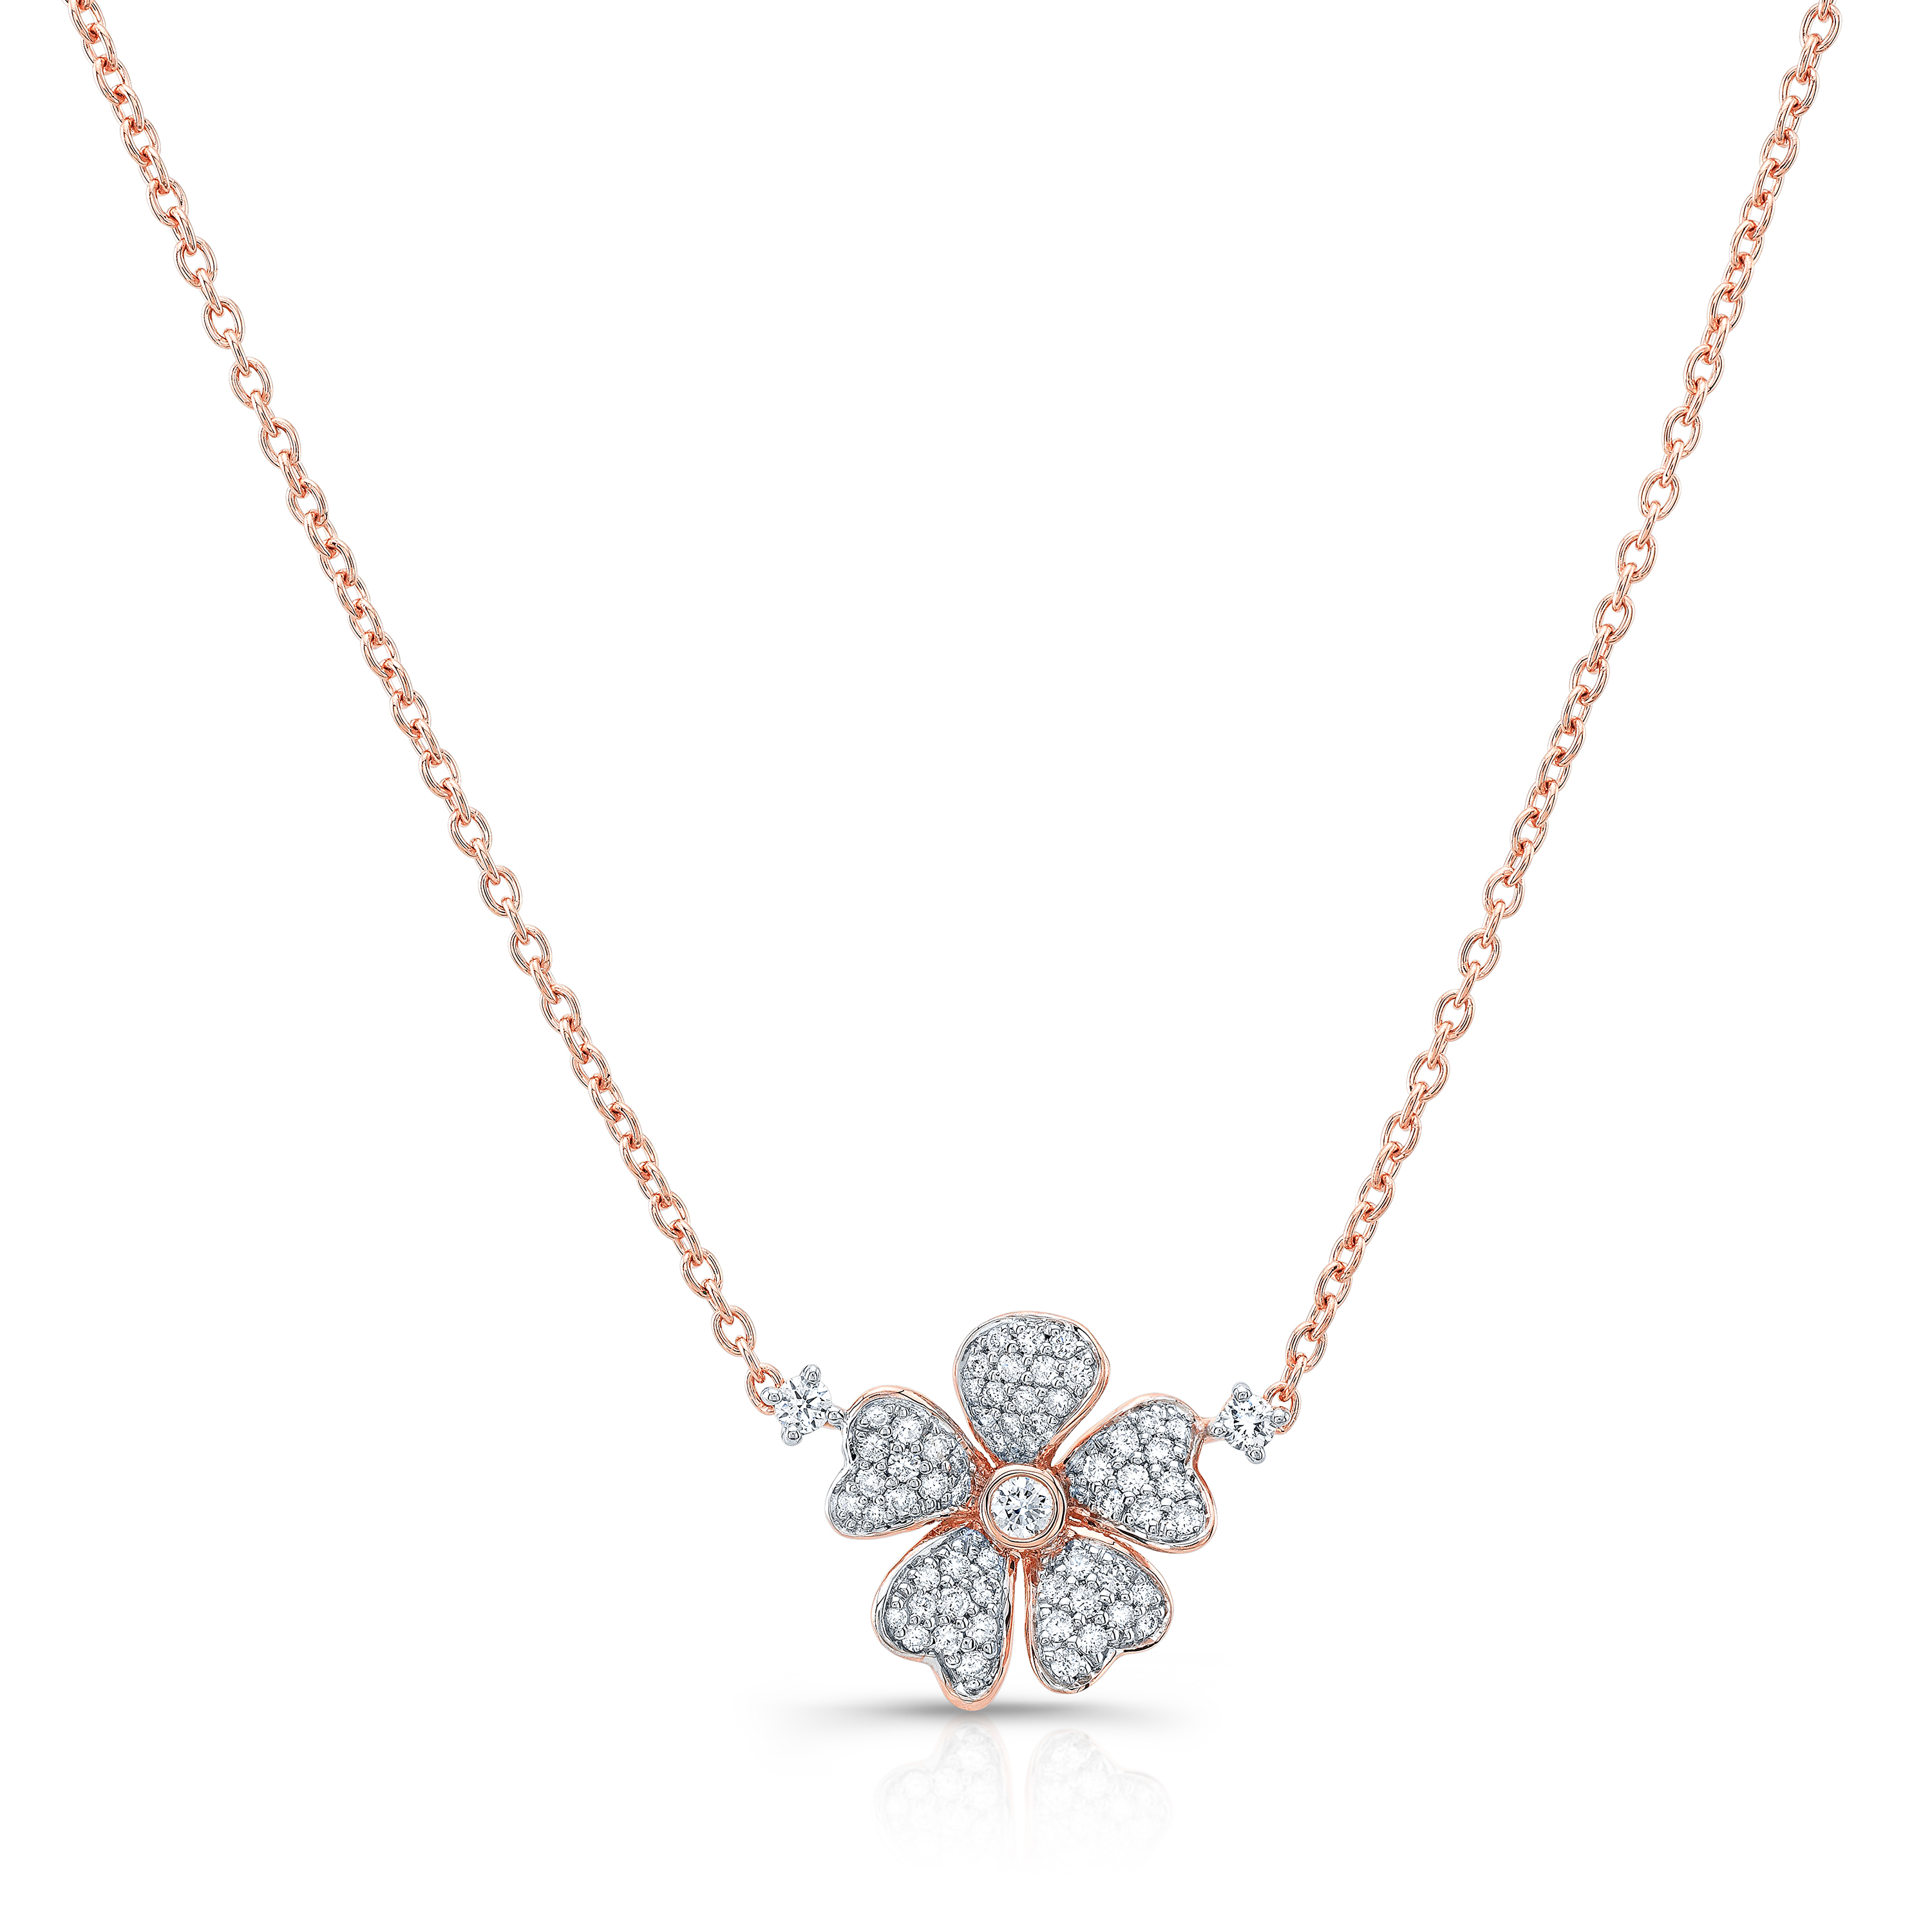 White Quartz Flower Pansy Necklace, 18K Rose Gold